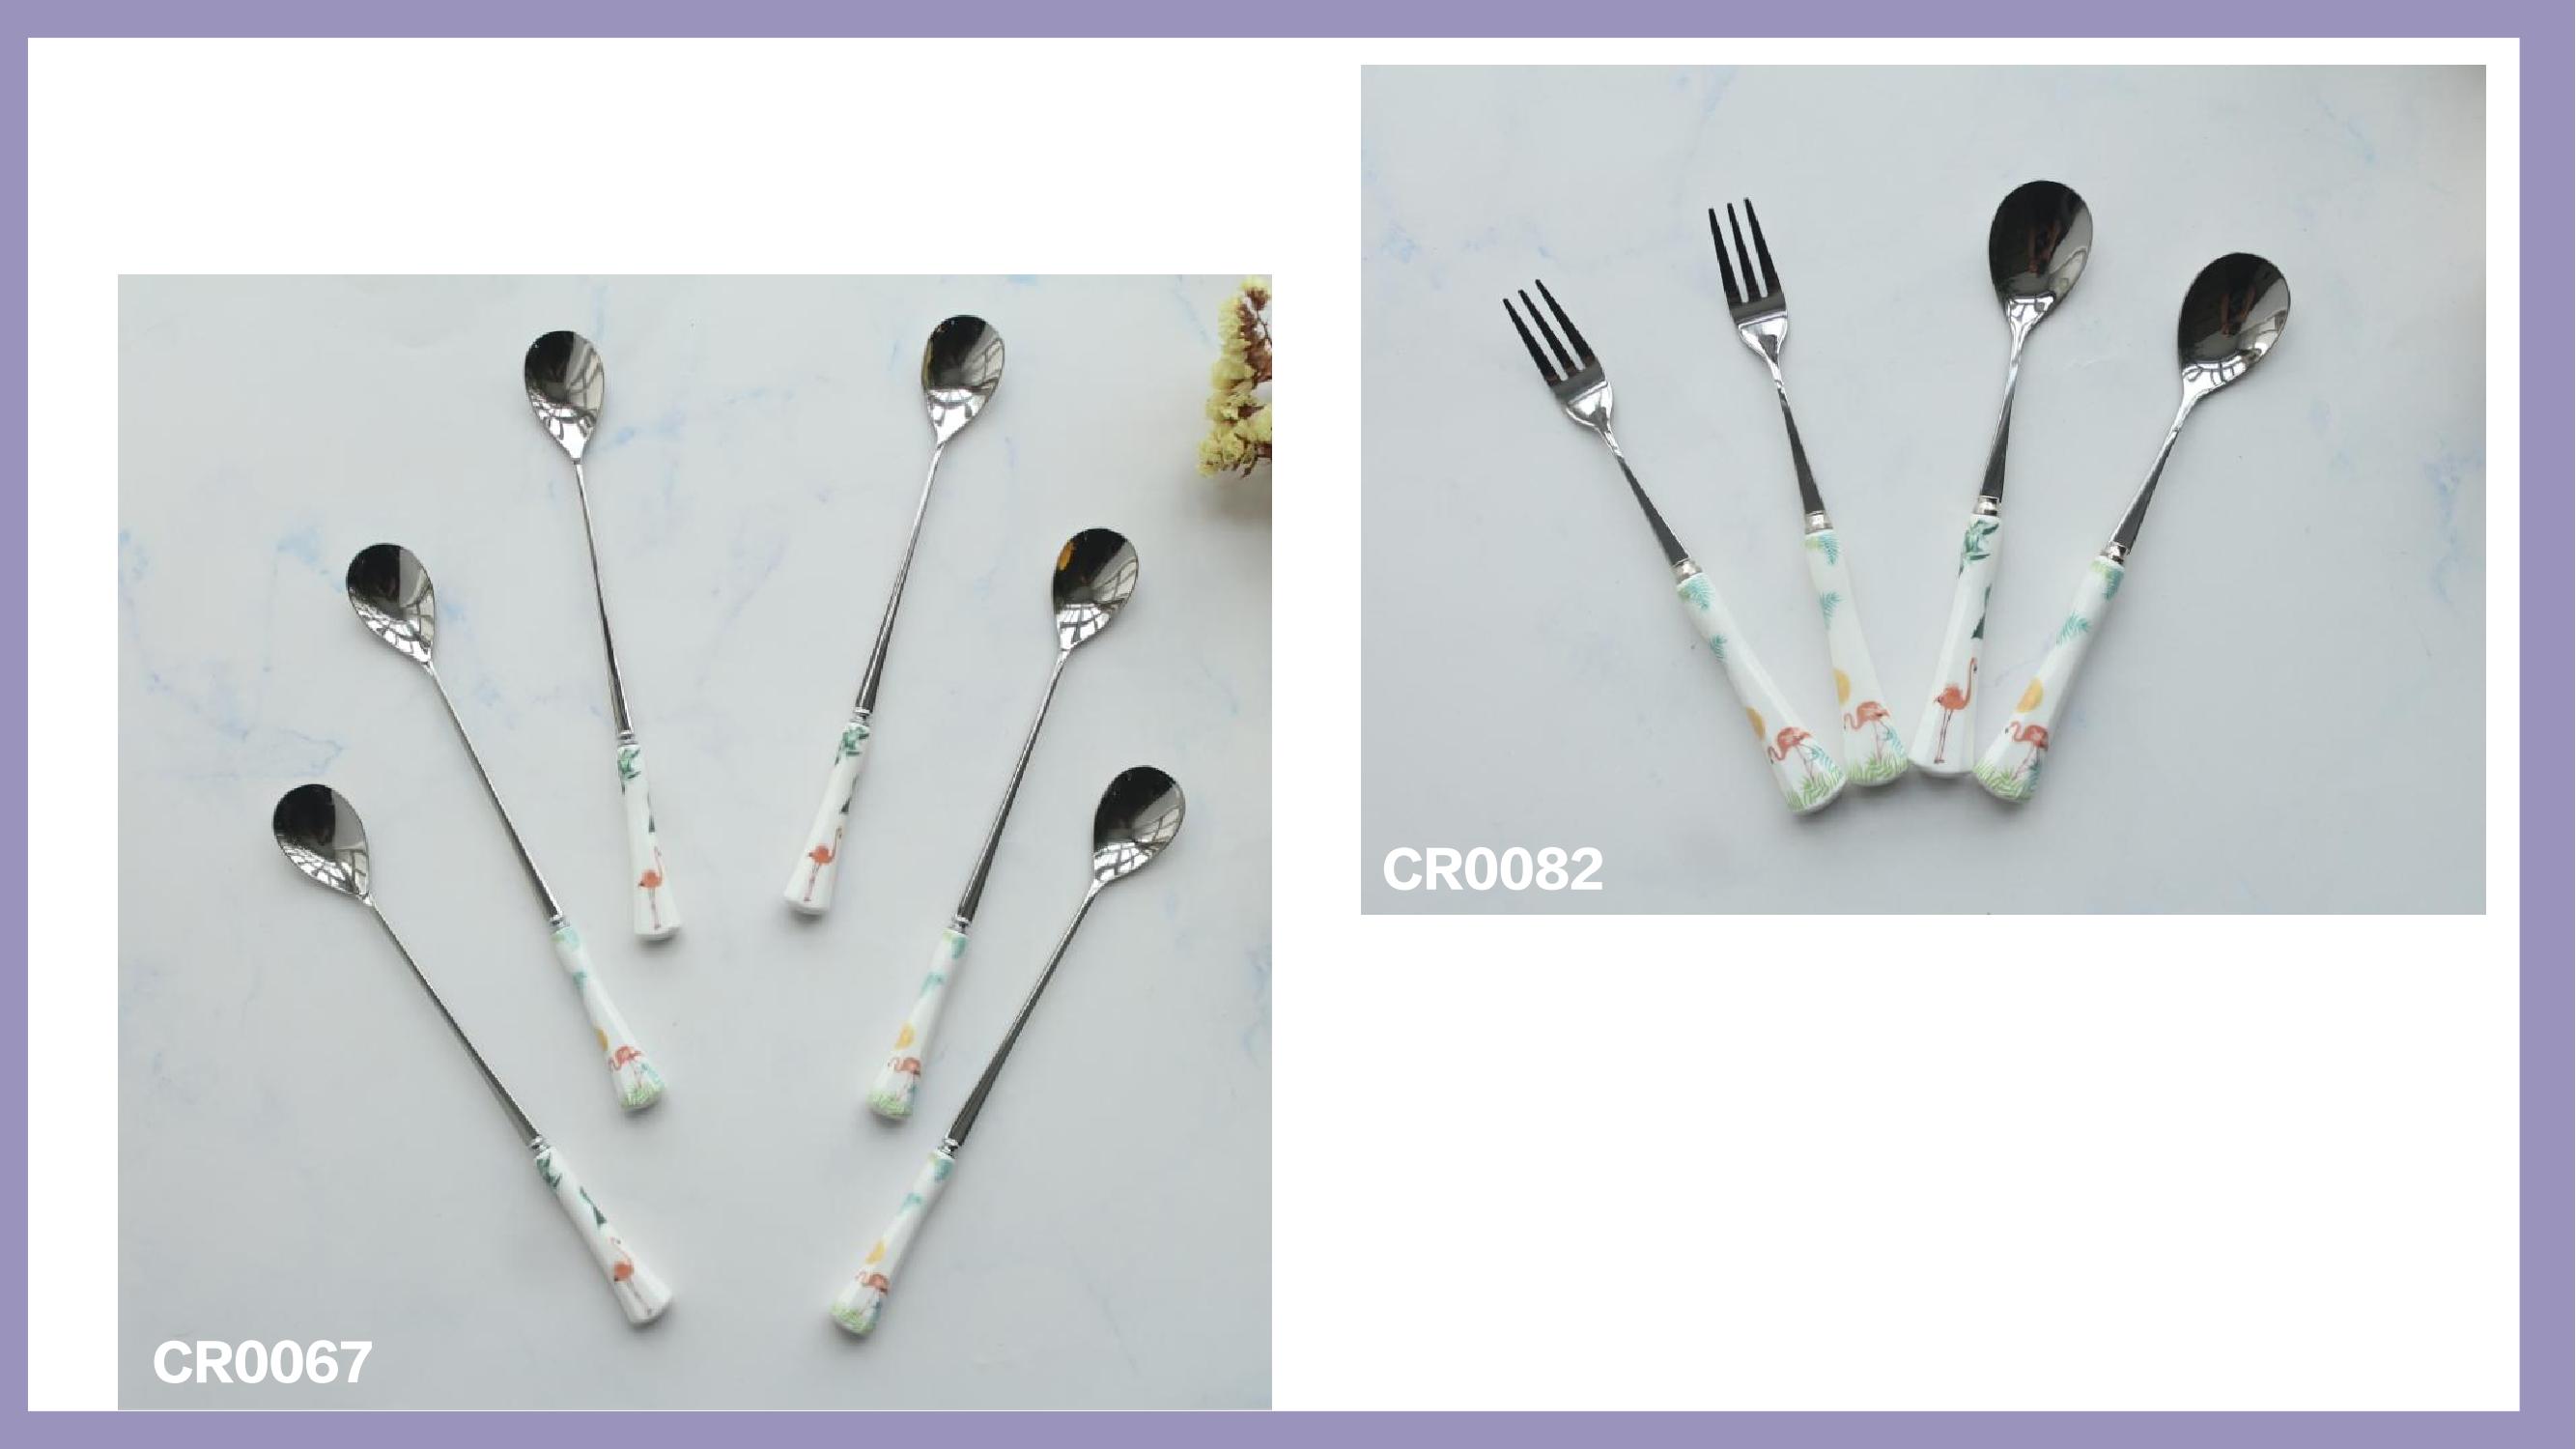 catalogue of ceramic handle cutlery_22.jpg